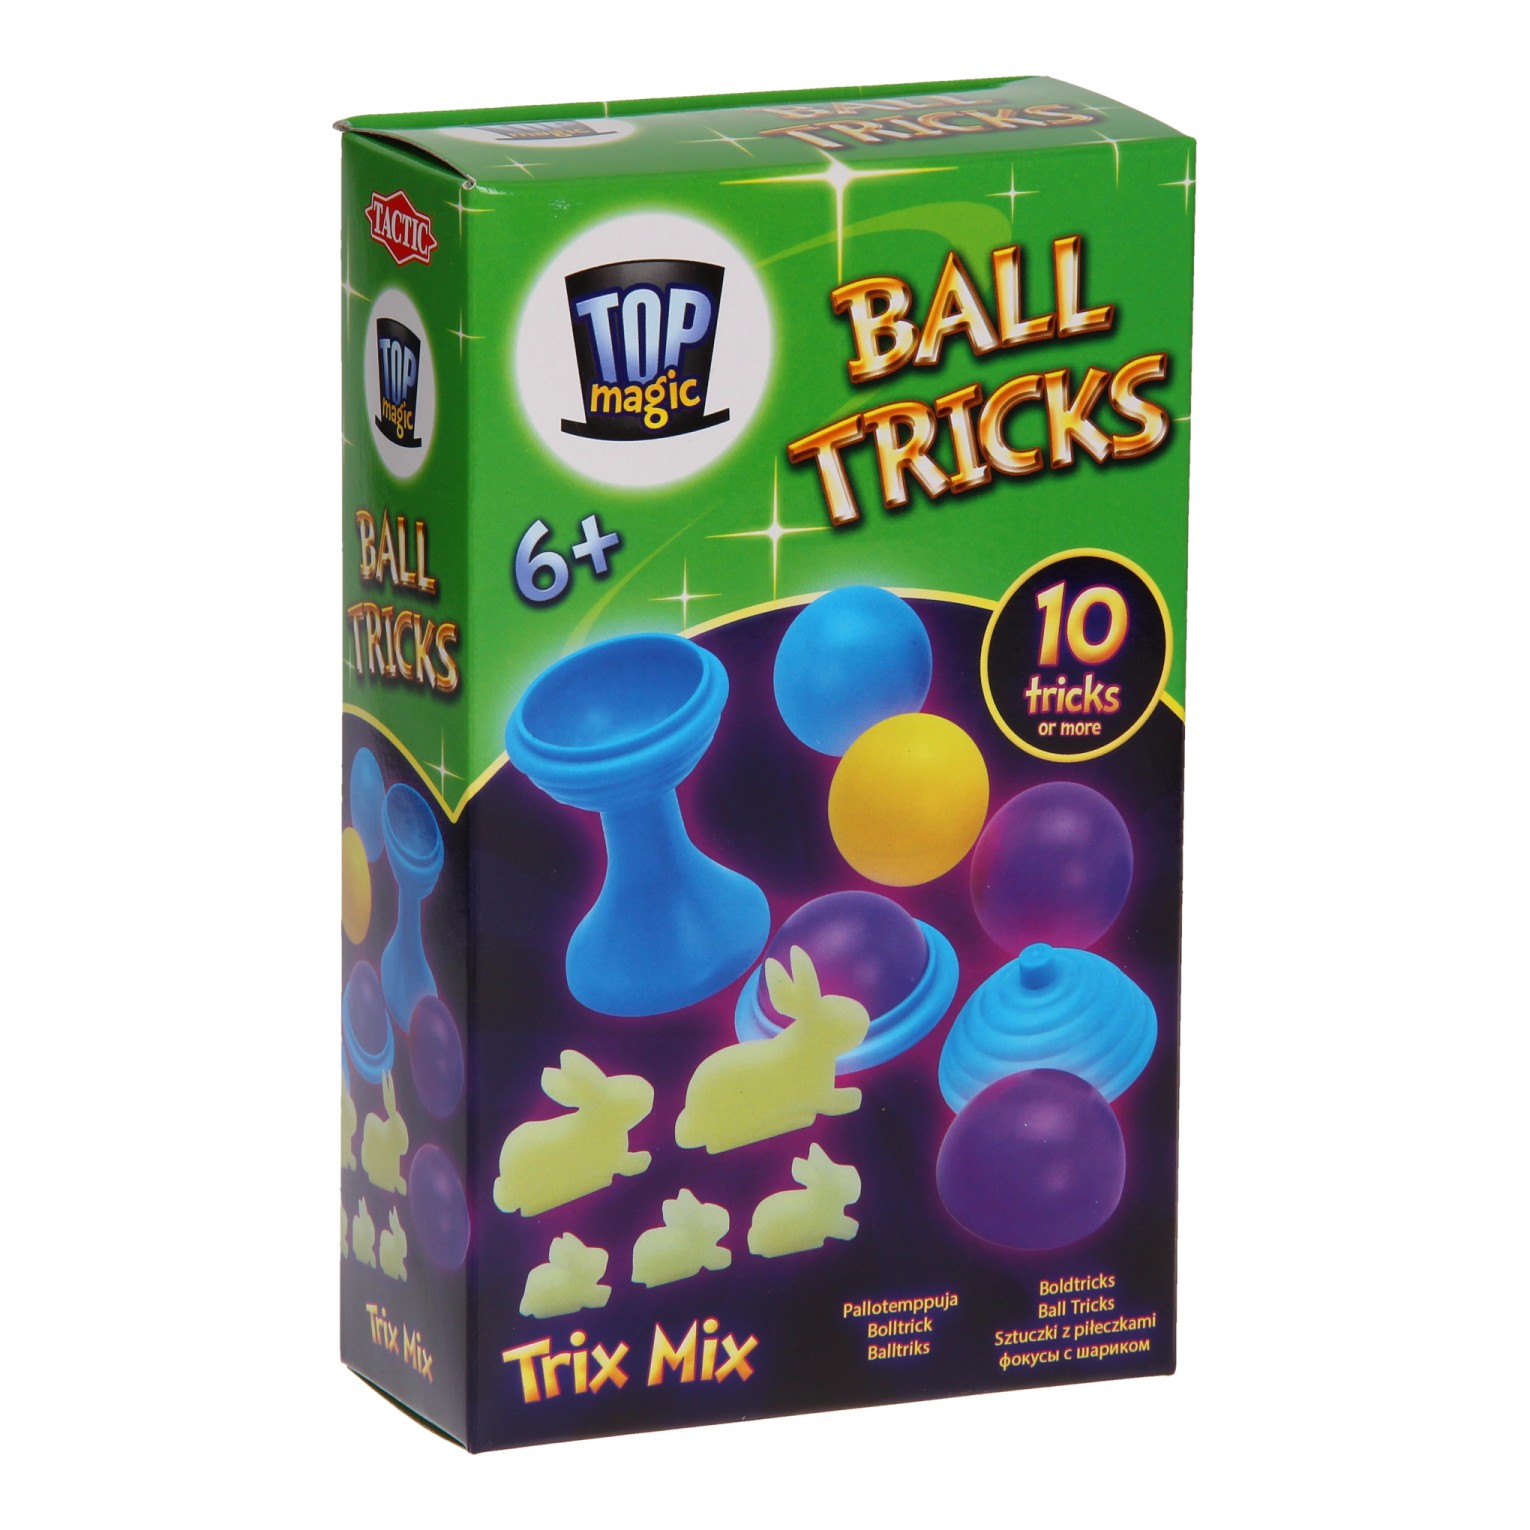 Top Magic Ball Tricks